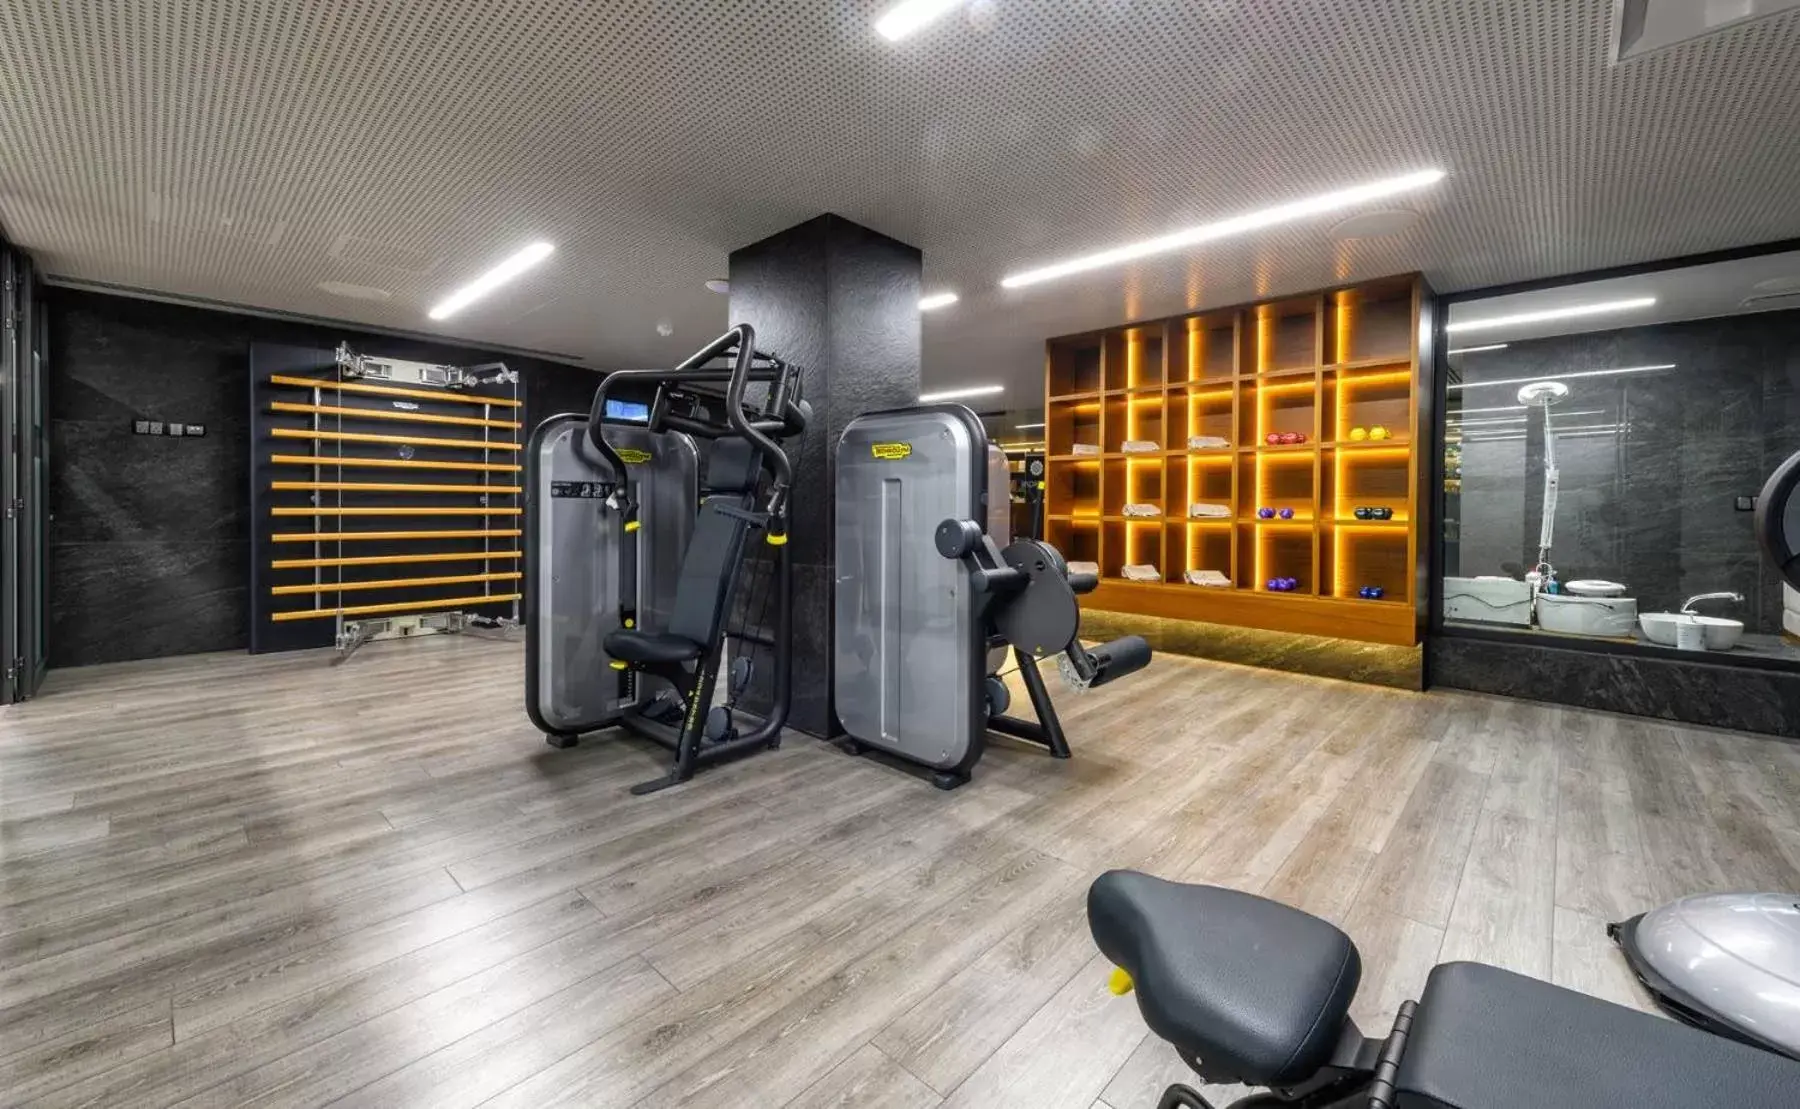 Fitness centre/facilities in Ajax Hotel